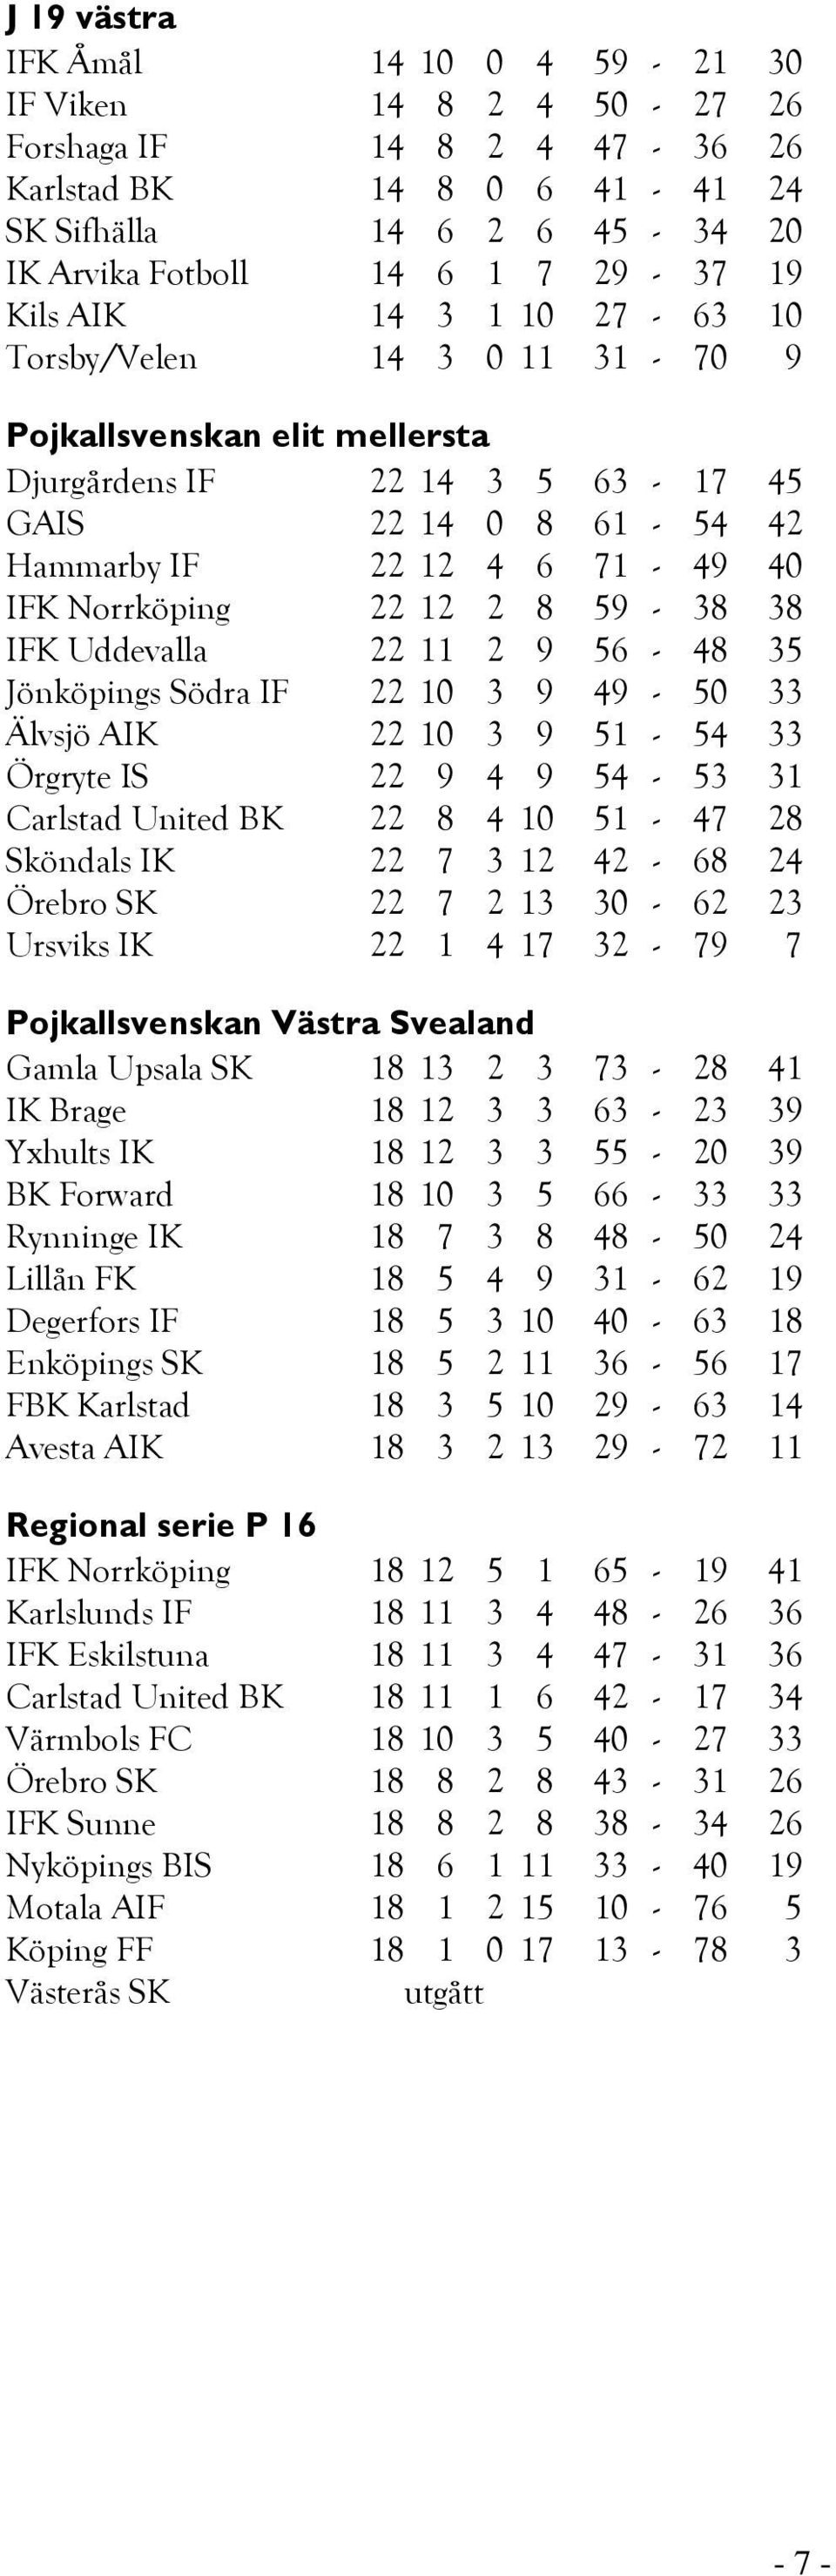 59-38 38 IFK Uddevalla 22 11 2 9 56-48 35 Jönköpings Södra IF 22 10 3 9 49-50 33 Älvsjö AIK 22 10 3 9 51-54 33 Örgryte IS 22 9 4 9 54-53 31 Carlstad United BK 22 8 4 10 51-47 28 Sköndals IK 22 7 3 12